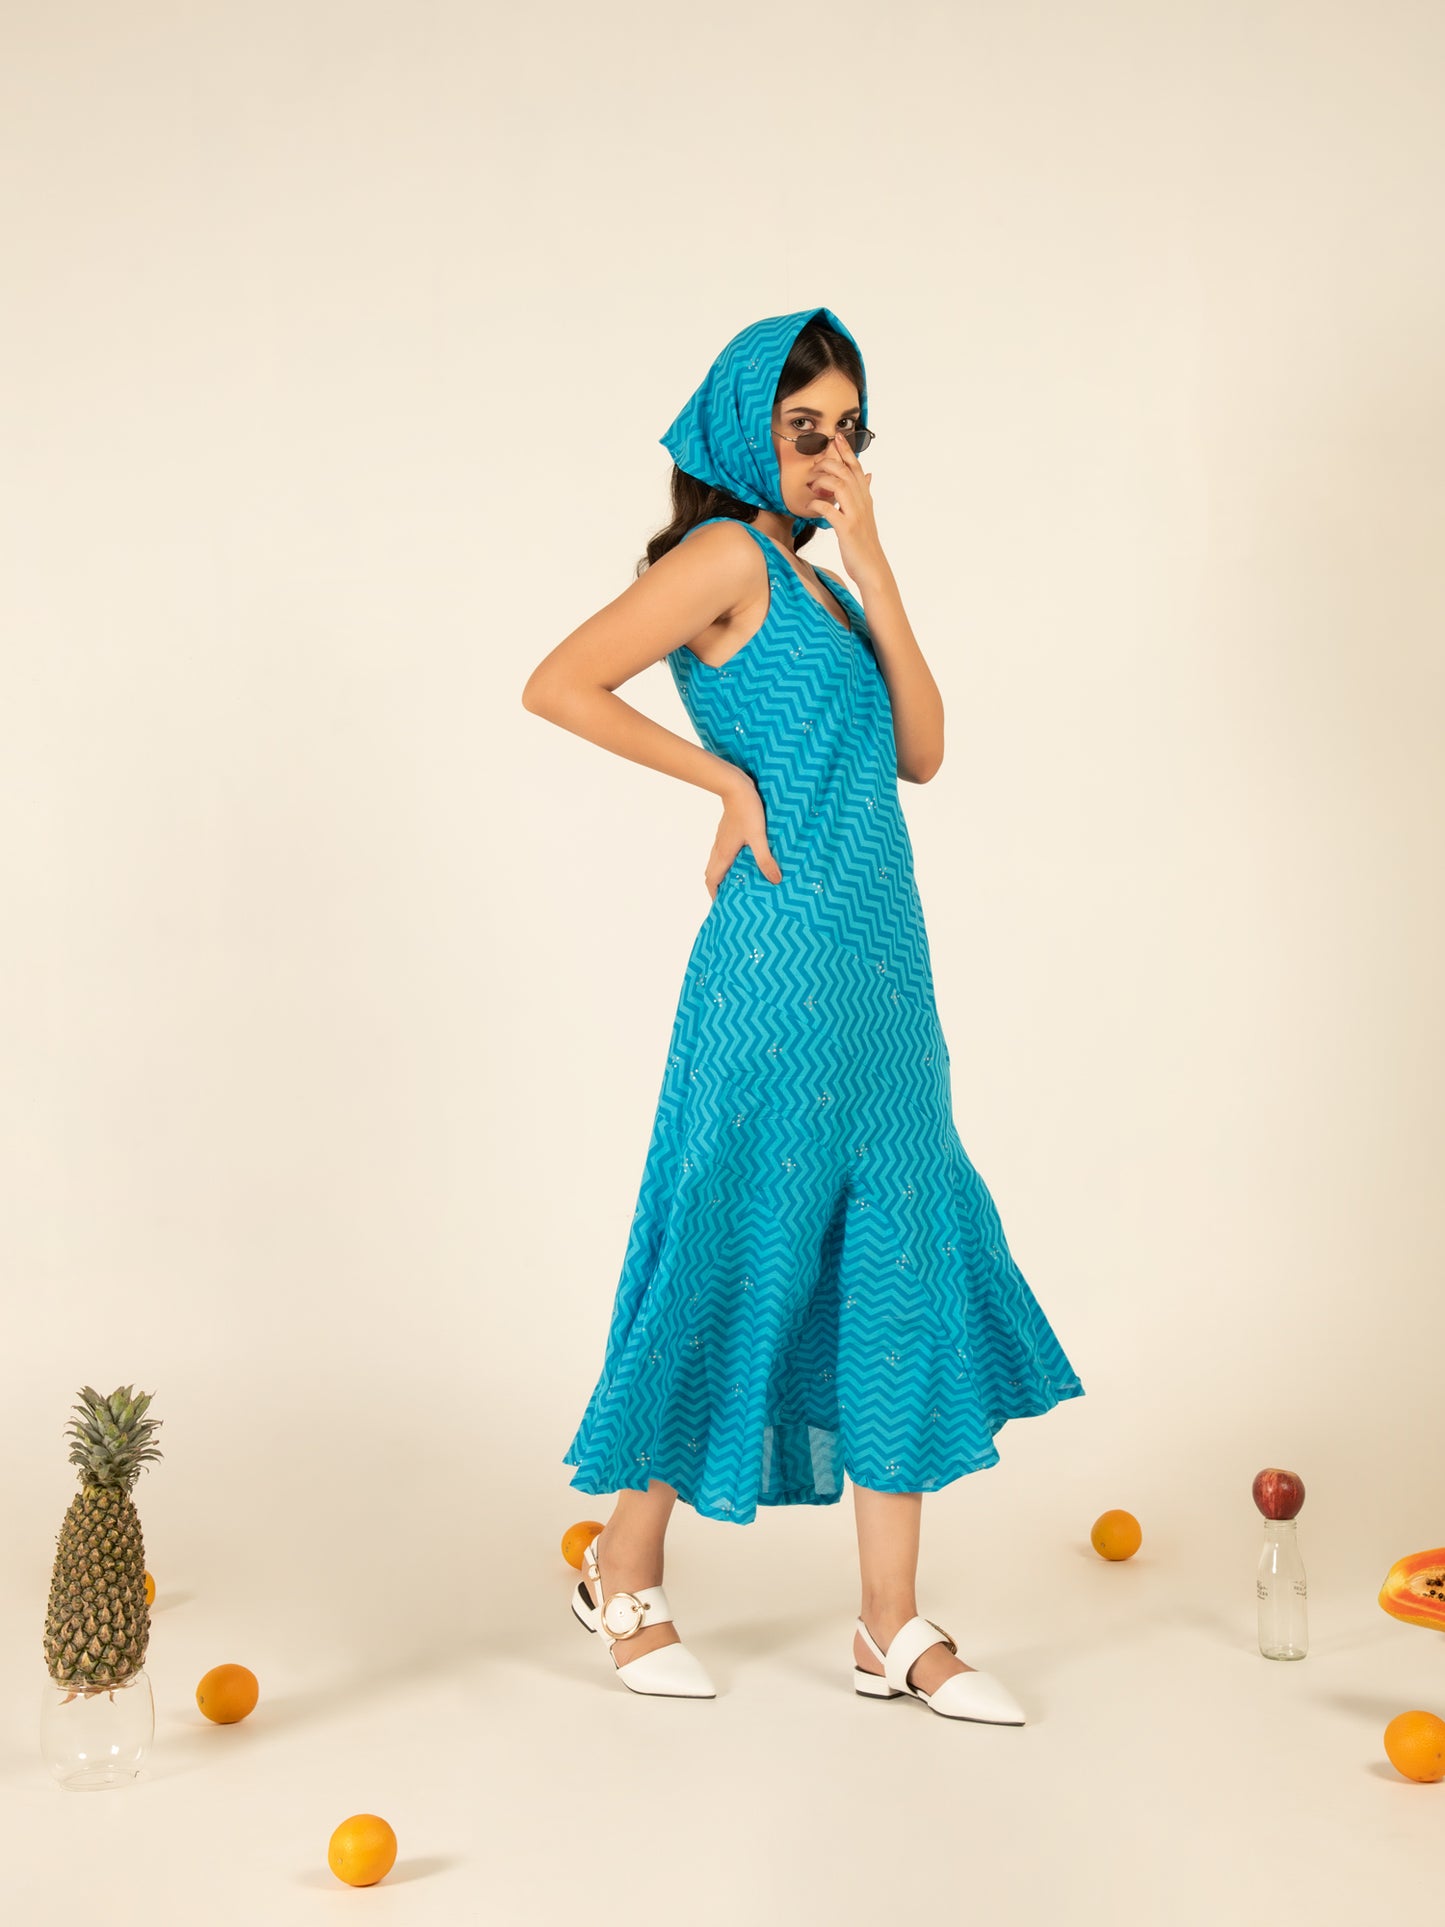 Sophia Blue Flounce Dress - Blue Hand Block Printed Sleeveless Cotton Dress